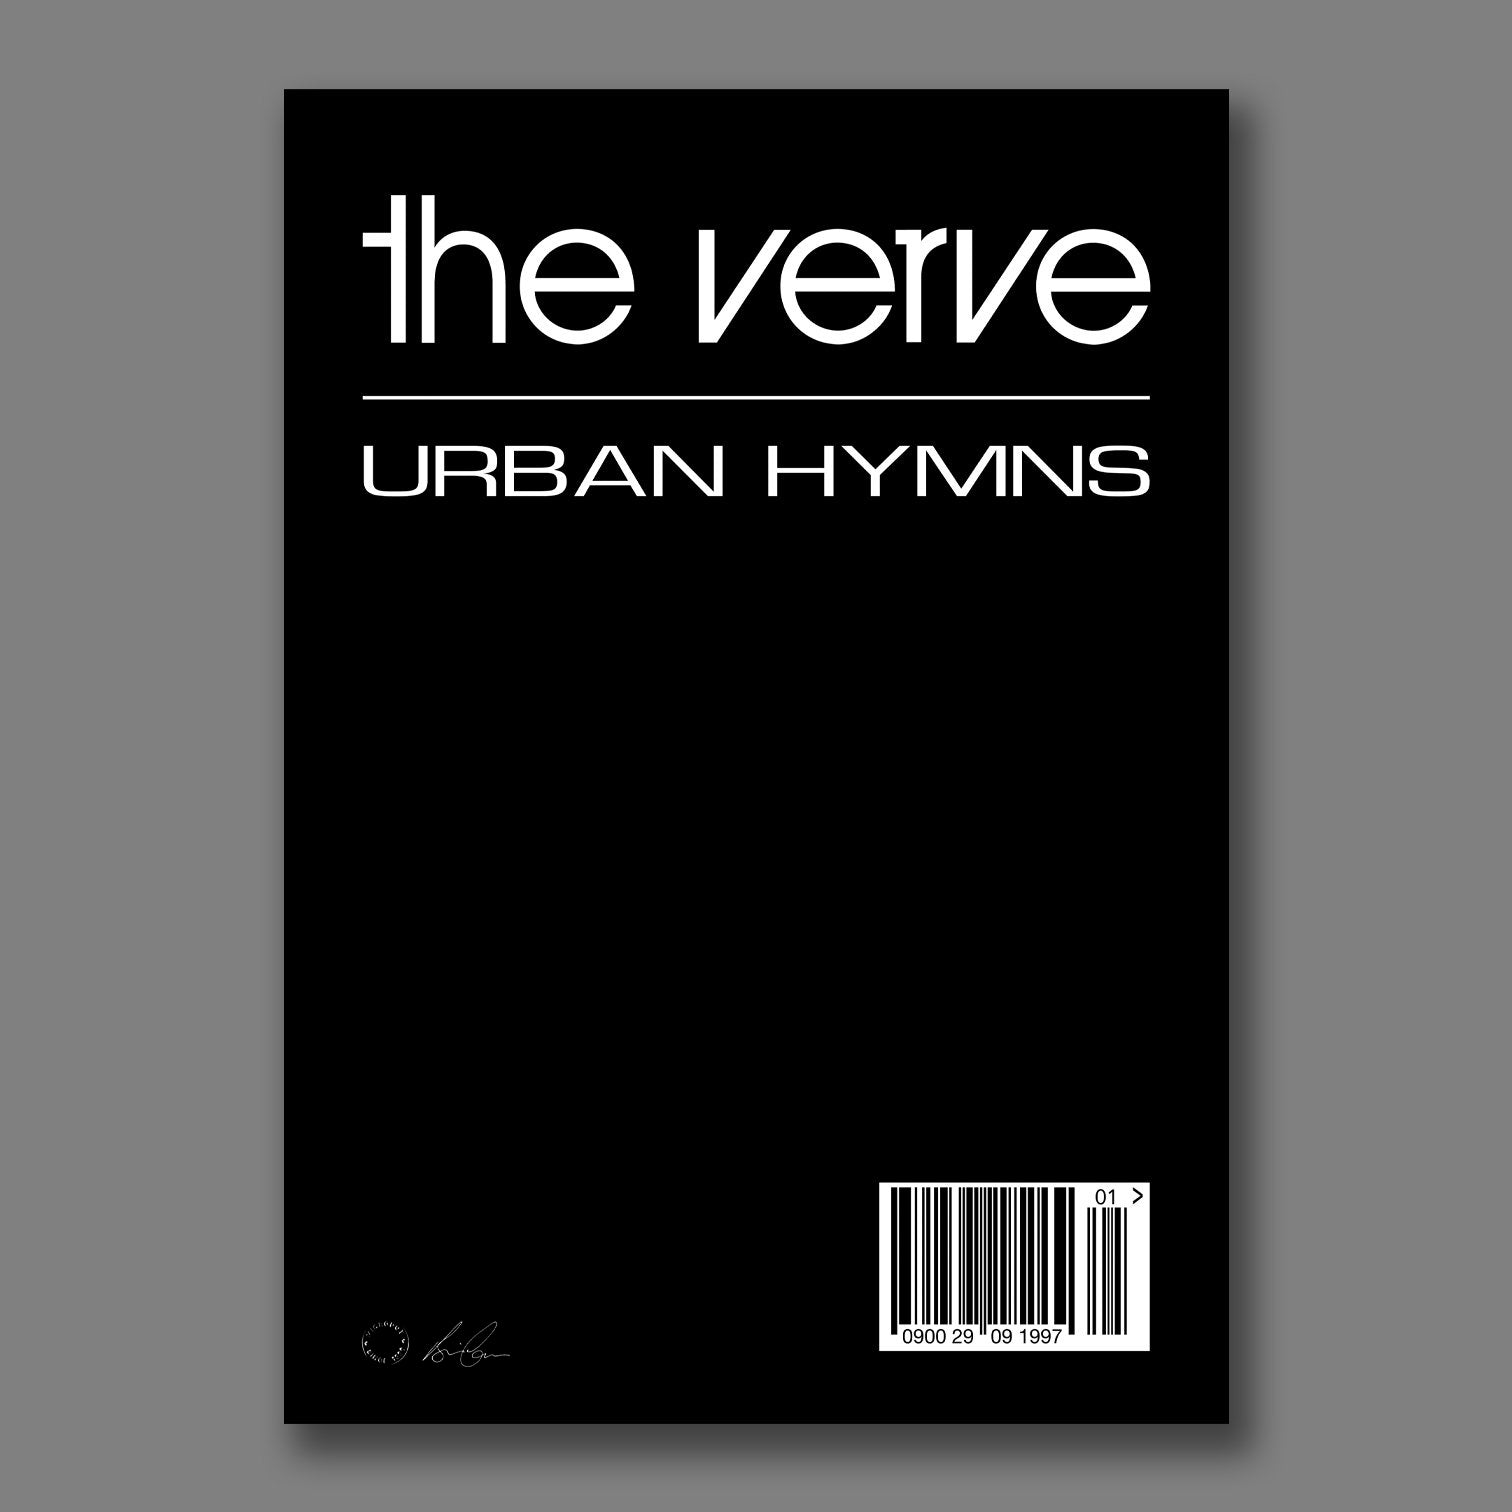 The Verve - Urban Hymns Print A1 - Slight Second - New Item